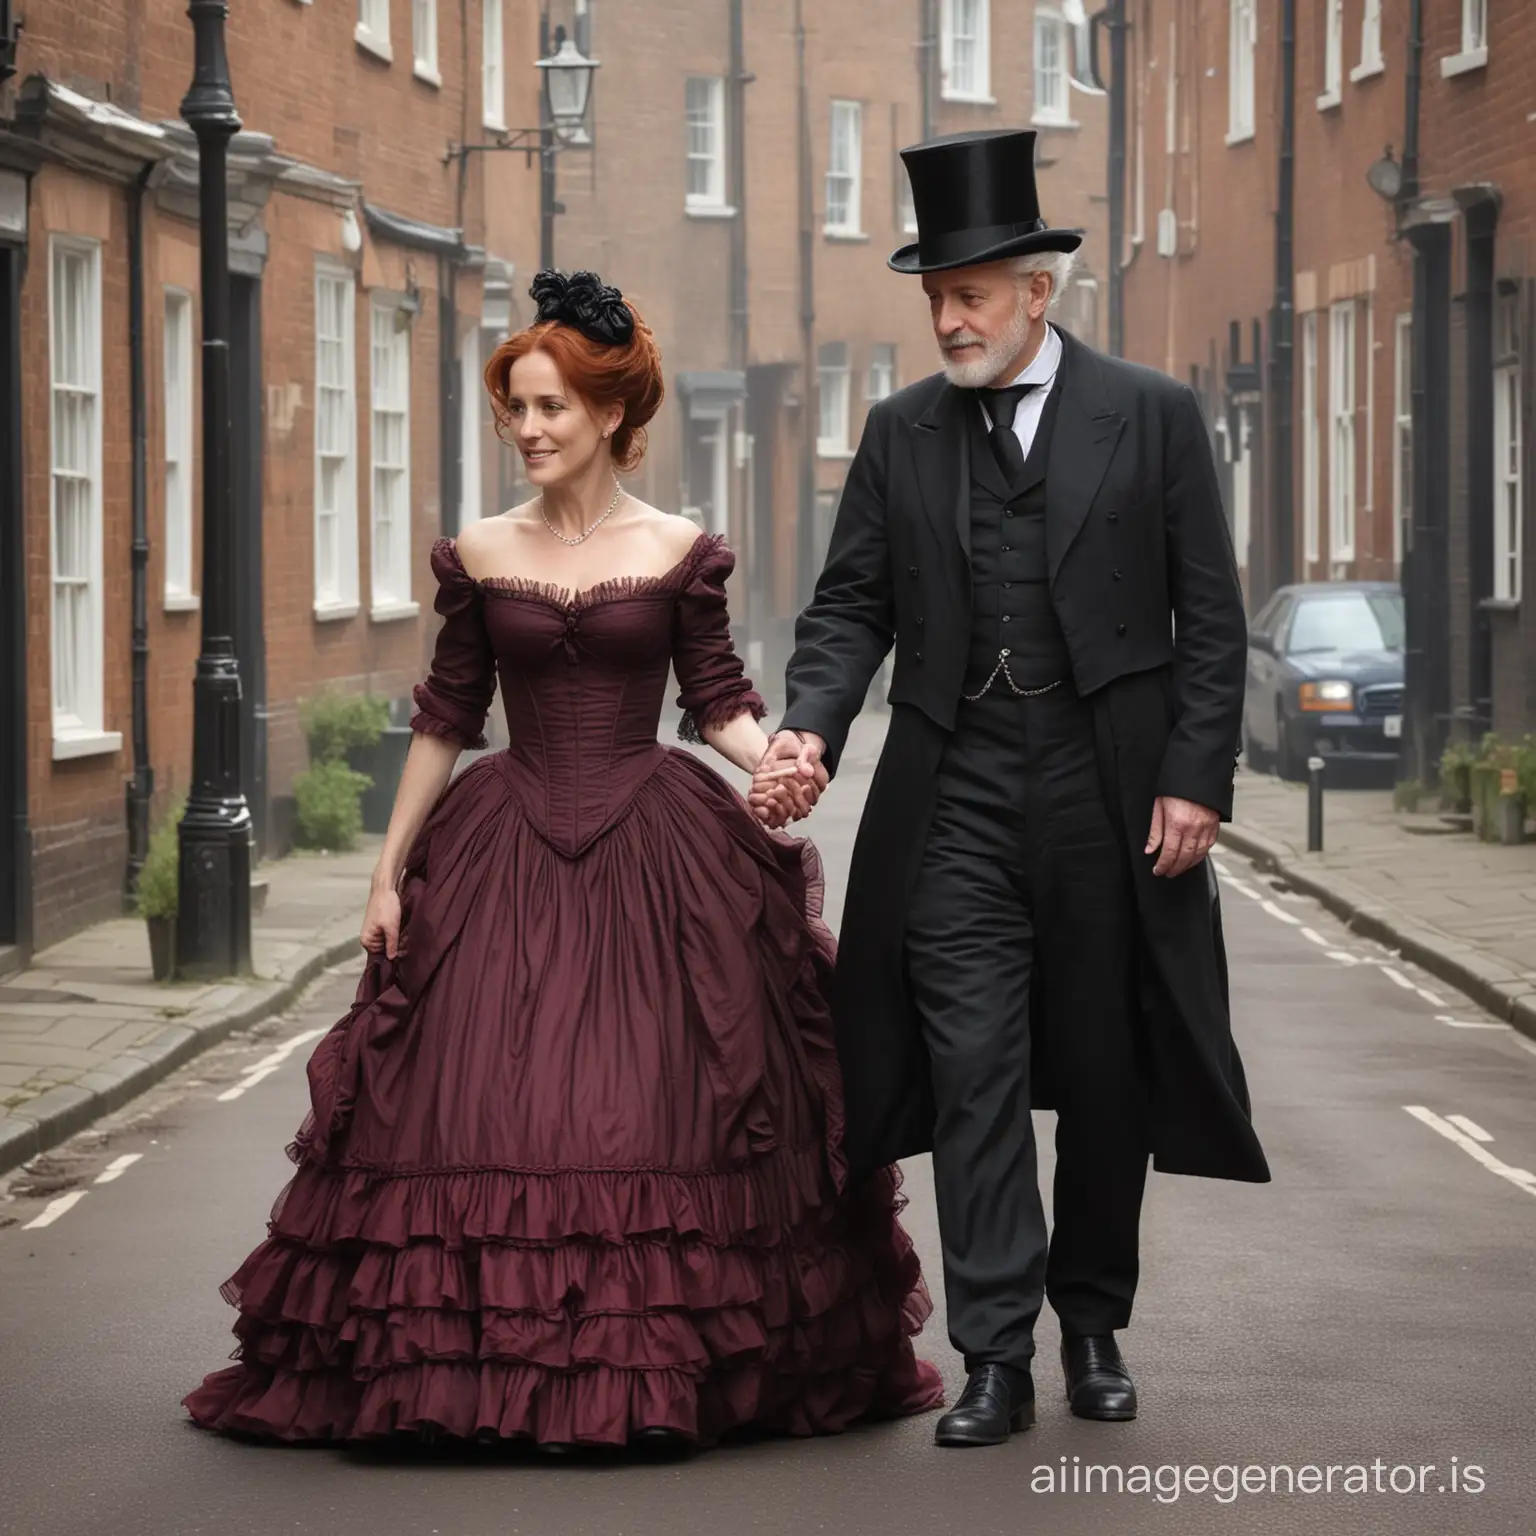 Victorian-Newlyweds-Strolling-Down-Historic-Street